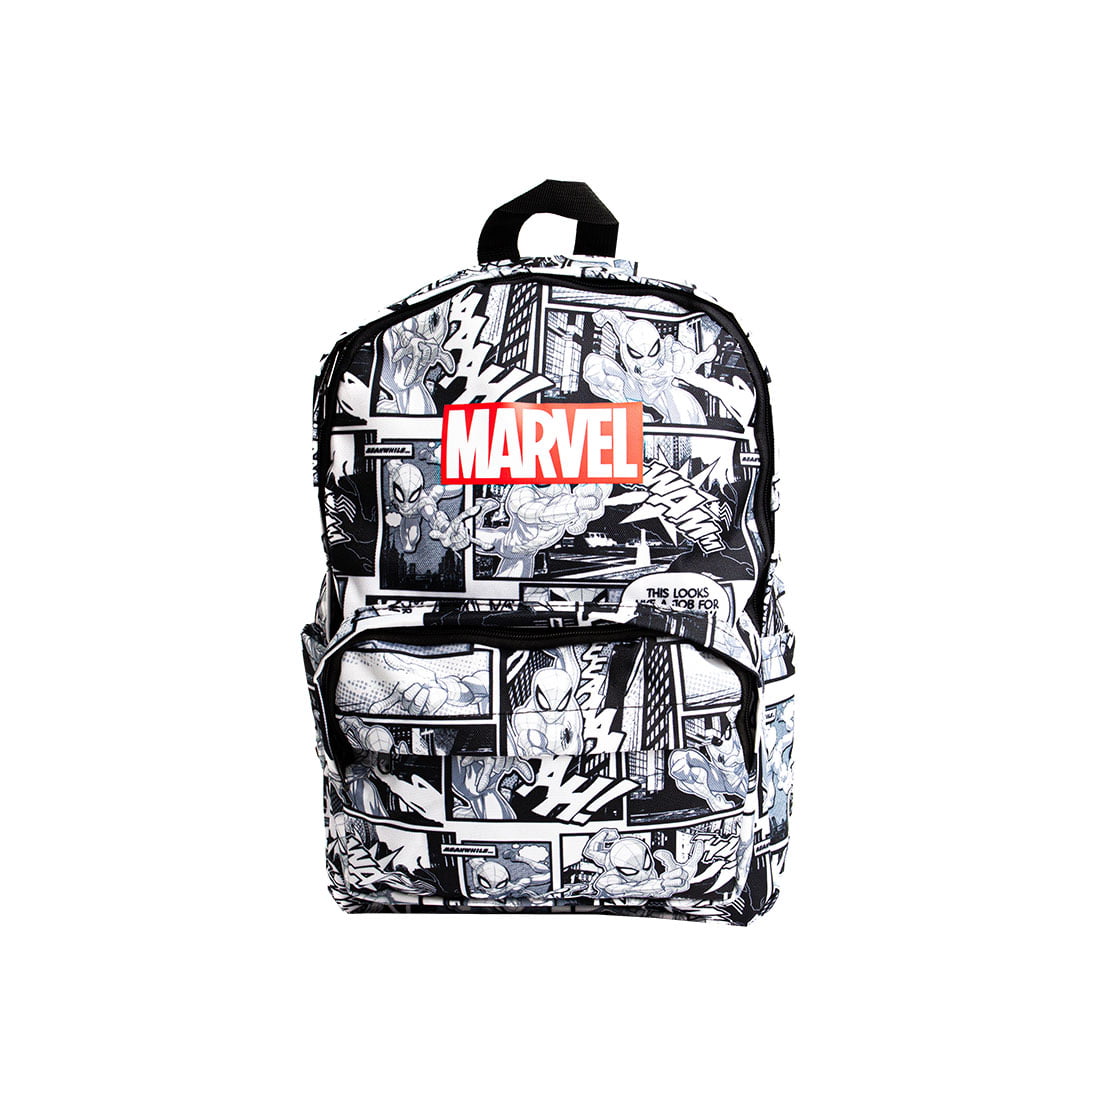 NOVEX Marvel Original Gym Travel Bag Black Online in India, Buy at Best  Price from Firstcry.com - 14548334